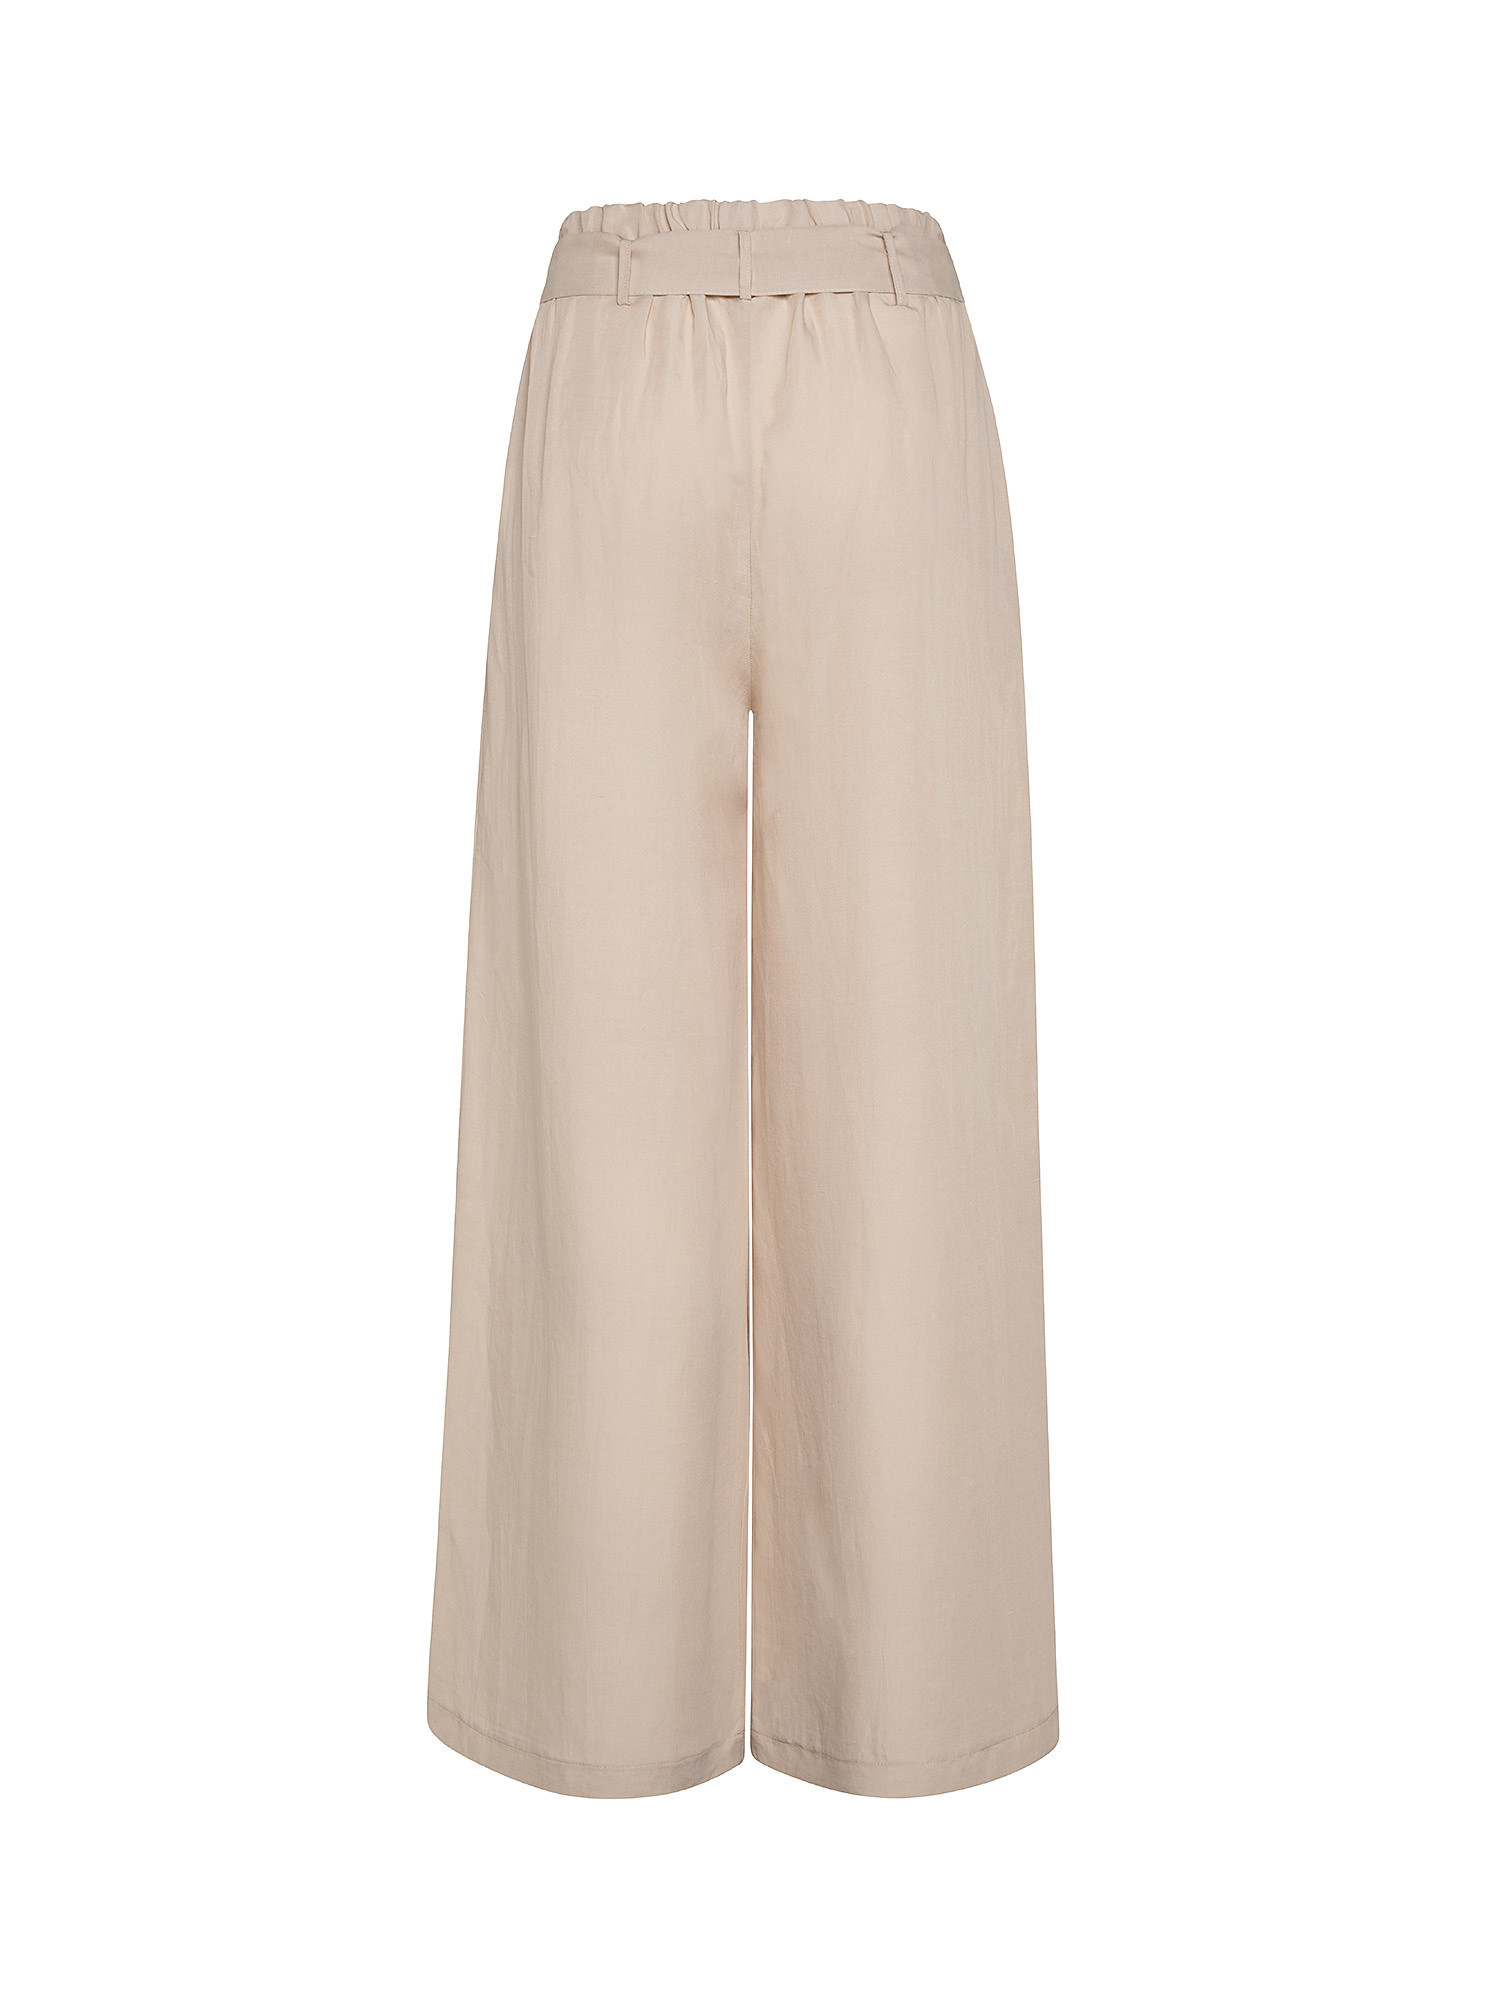 Trouser skirt, Beige, large image number 1